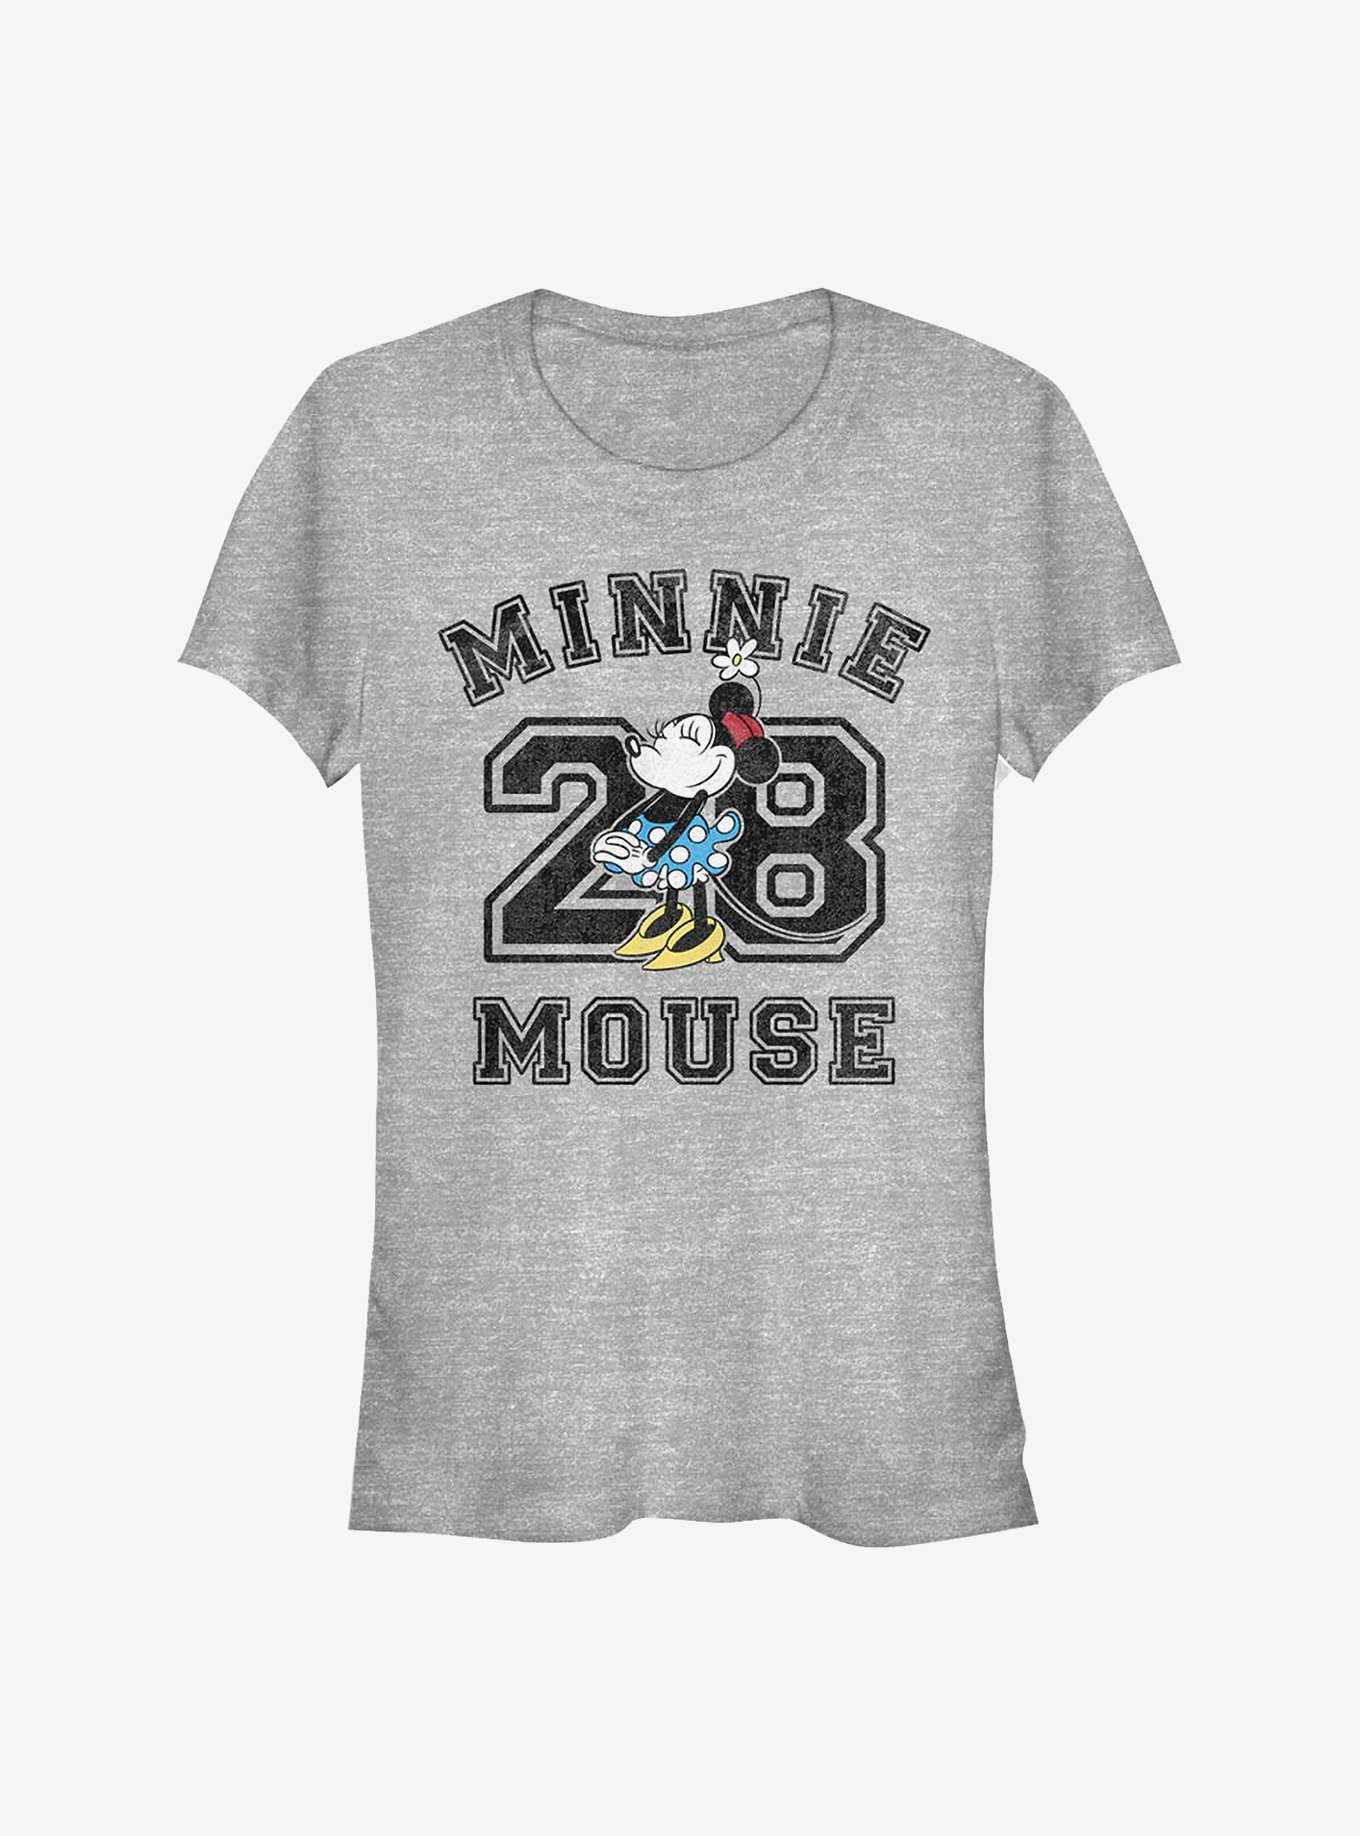 Disney Minnie Mouse Minnie Mouse Collegiate Girls T-Shirt, , hi-res